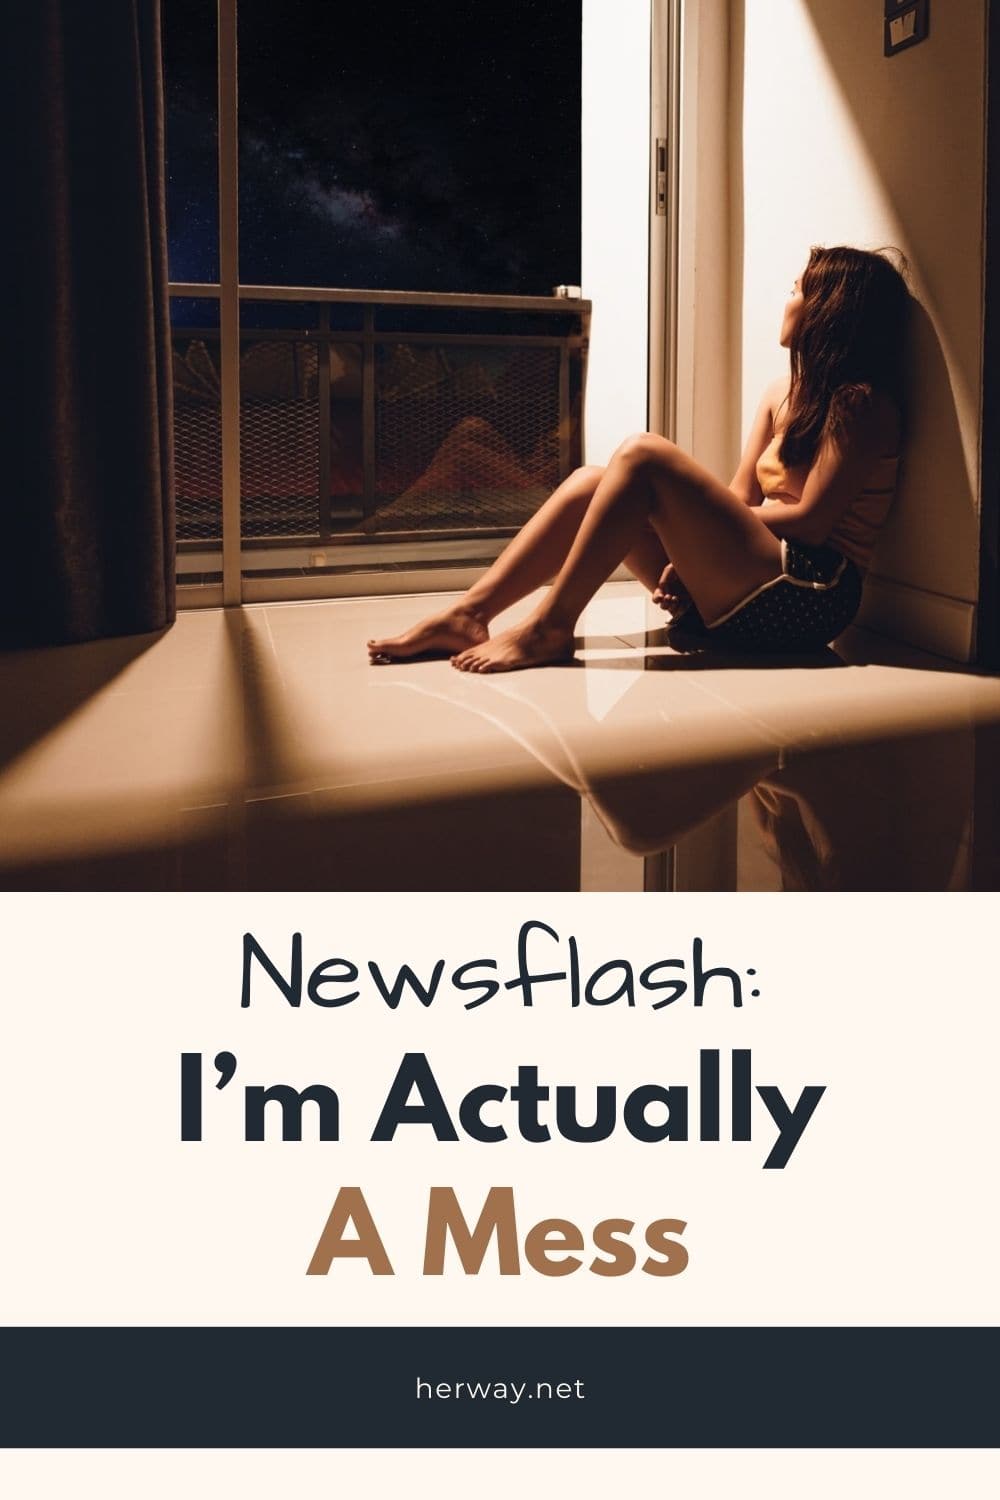 Newsflash: I’m Actually A Mess